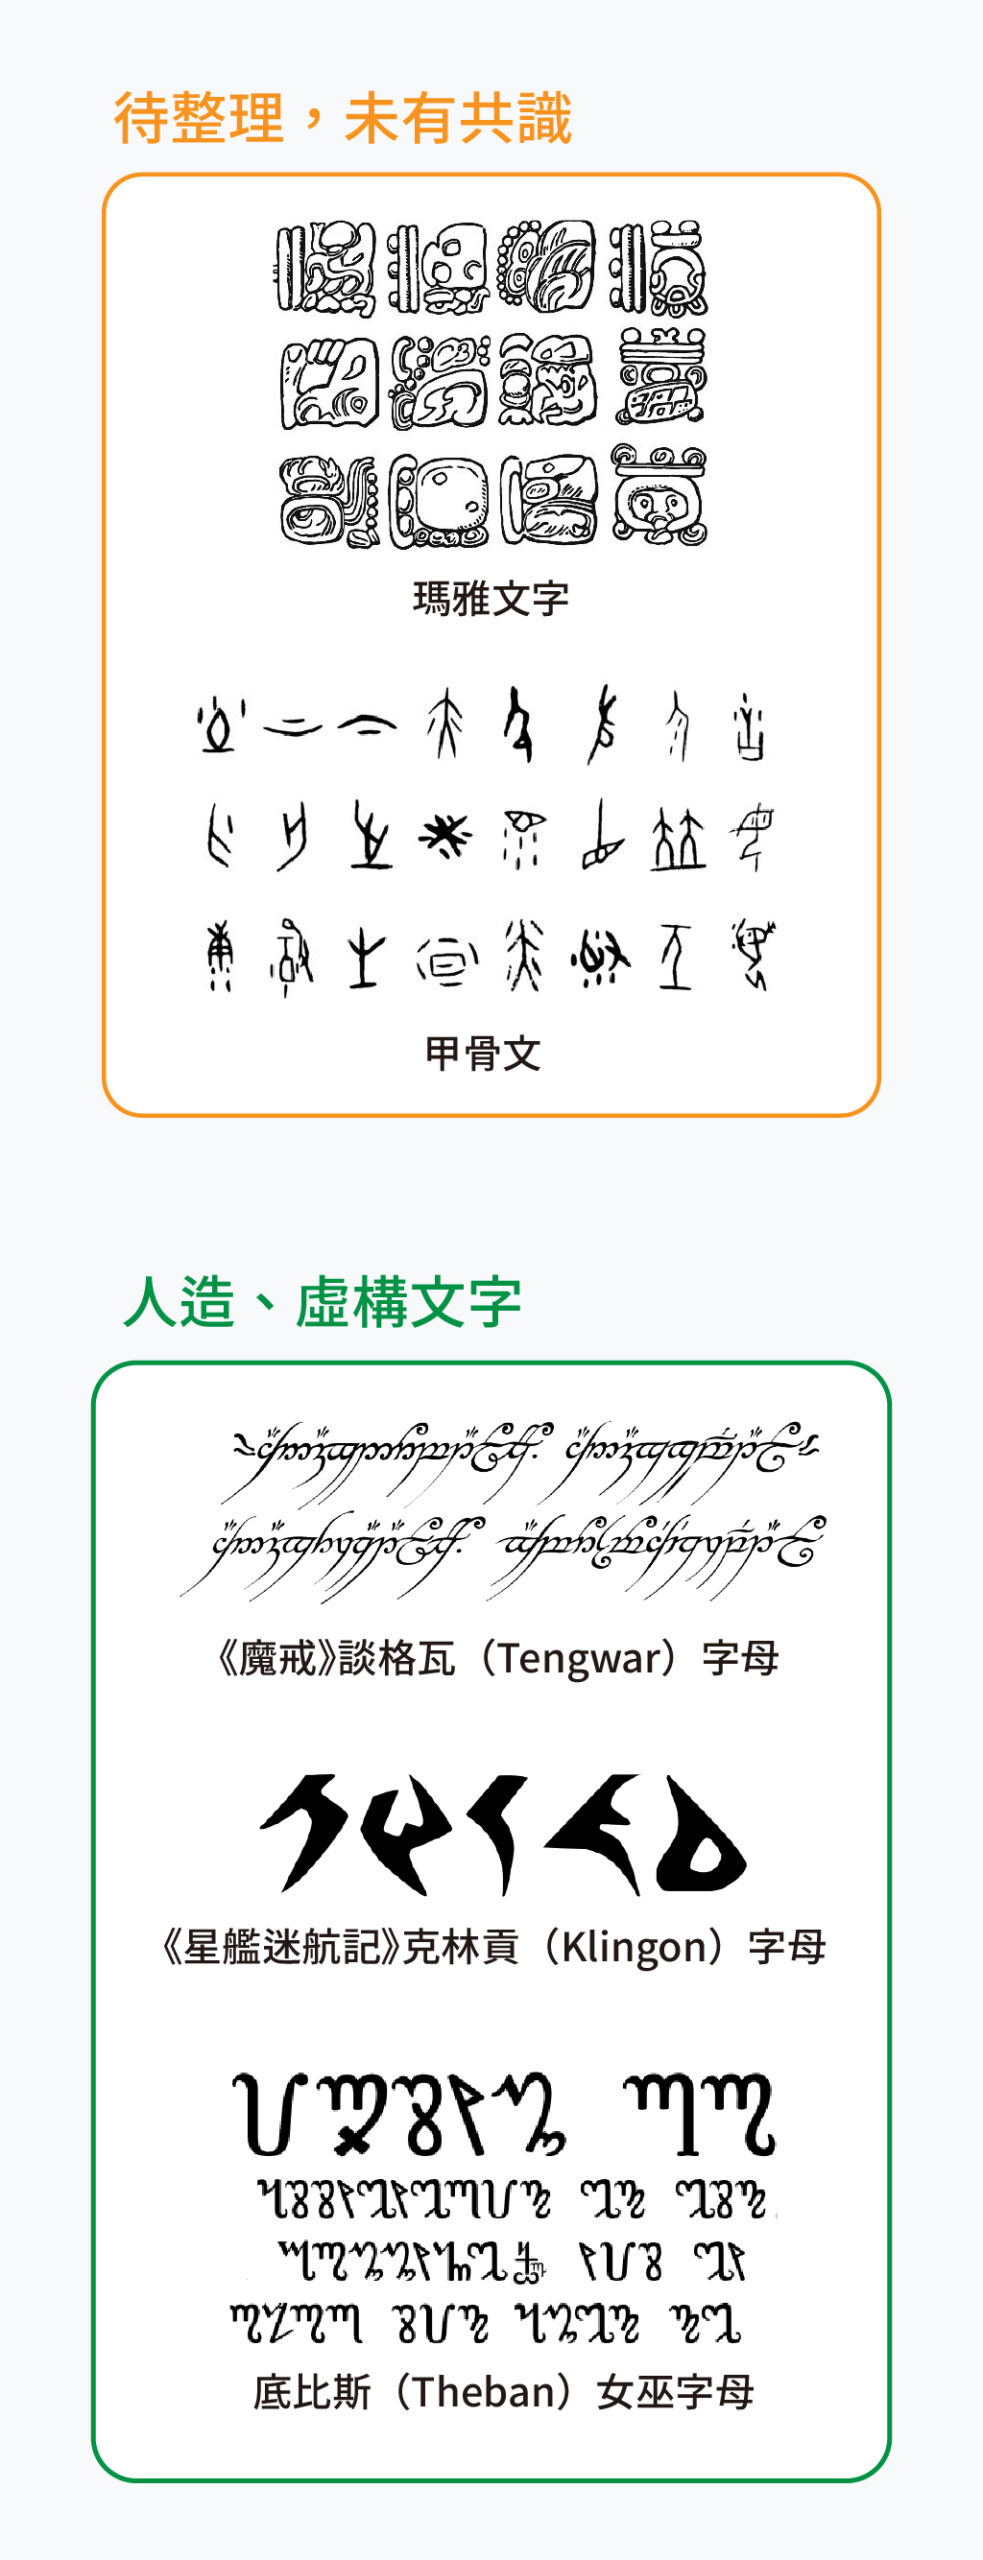 Unicode 未收錄待整理、未有共識的文字（如瑪雅文字），以及人造、虛構的文字（如克林貢文等）。